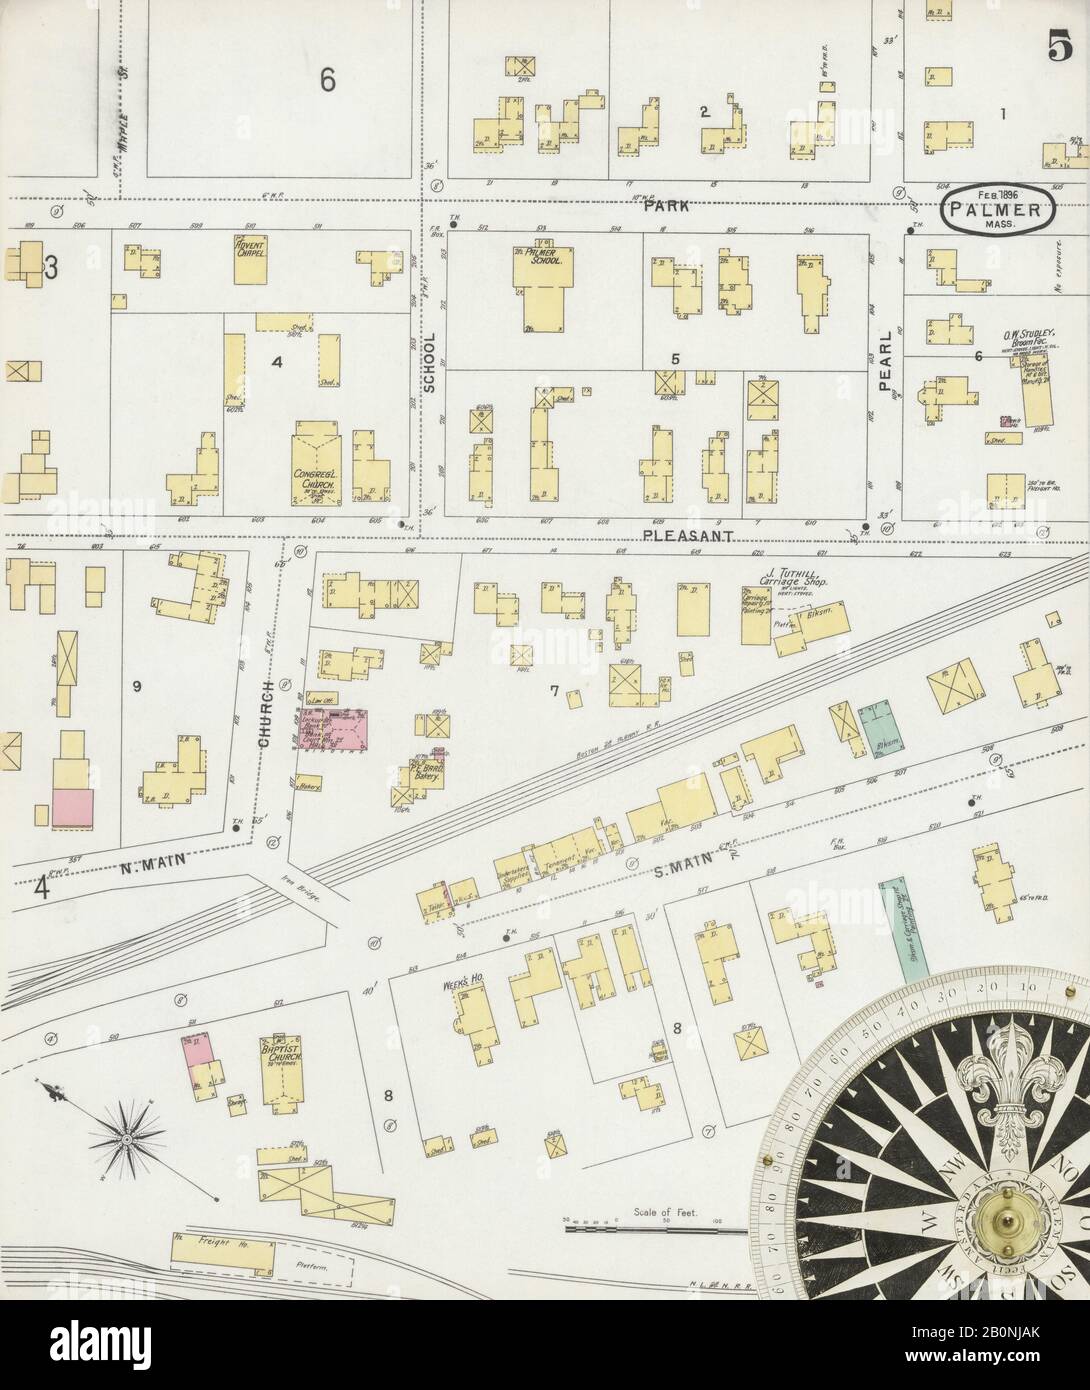 Bild 5 von Sanborn Fire Insurance Map aus Palmer, Hampden County, Massachusetts. Feb. 6 Blatt(e), Amerika, Straßenkarte mit einem Kompass Aus Dem 19. Jahrhundert Stockfoto